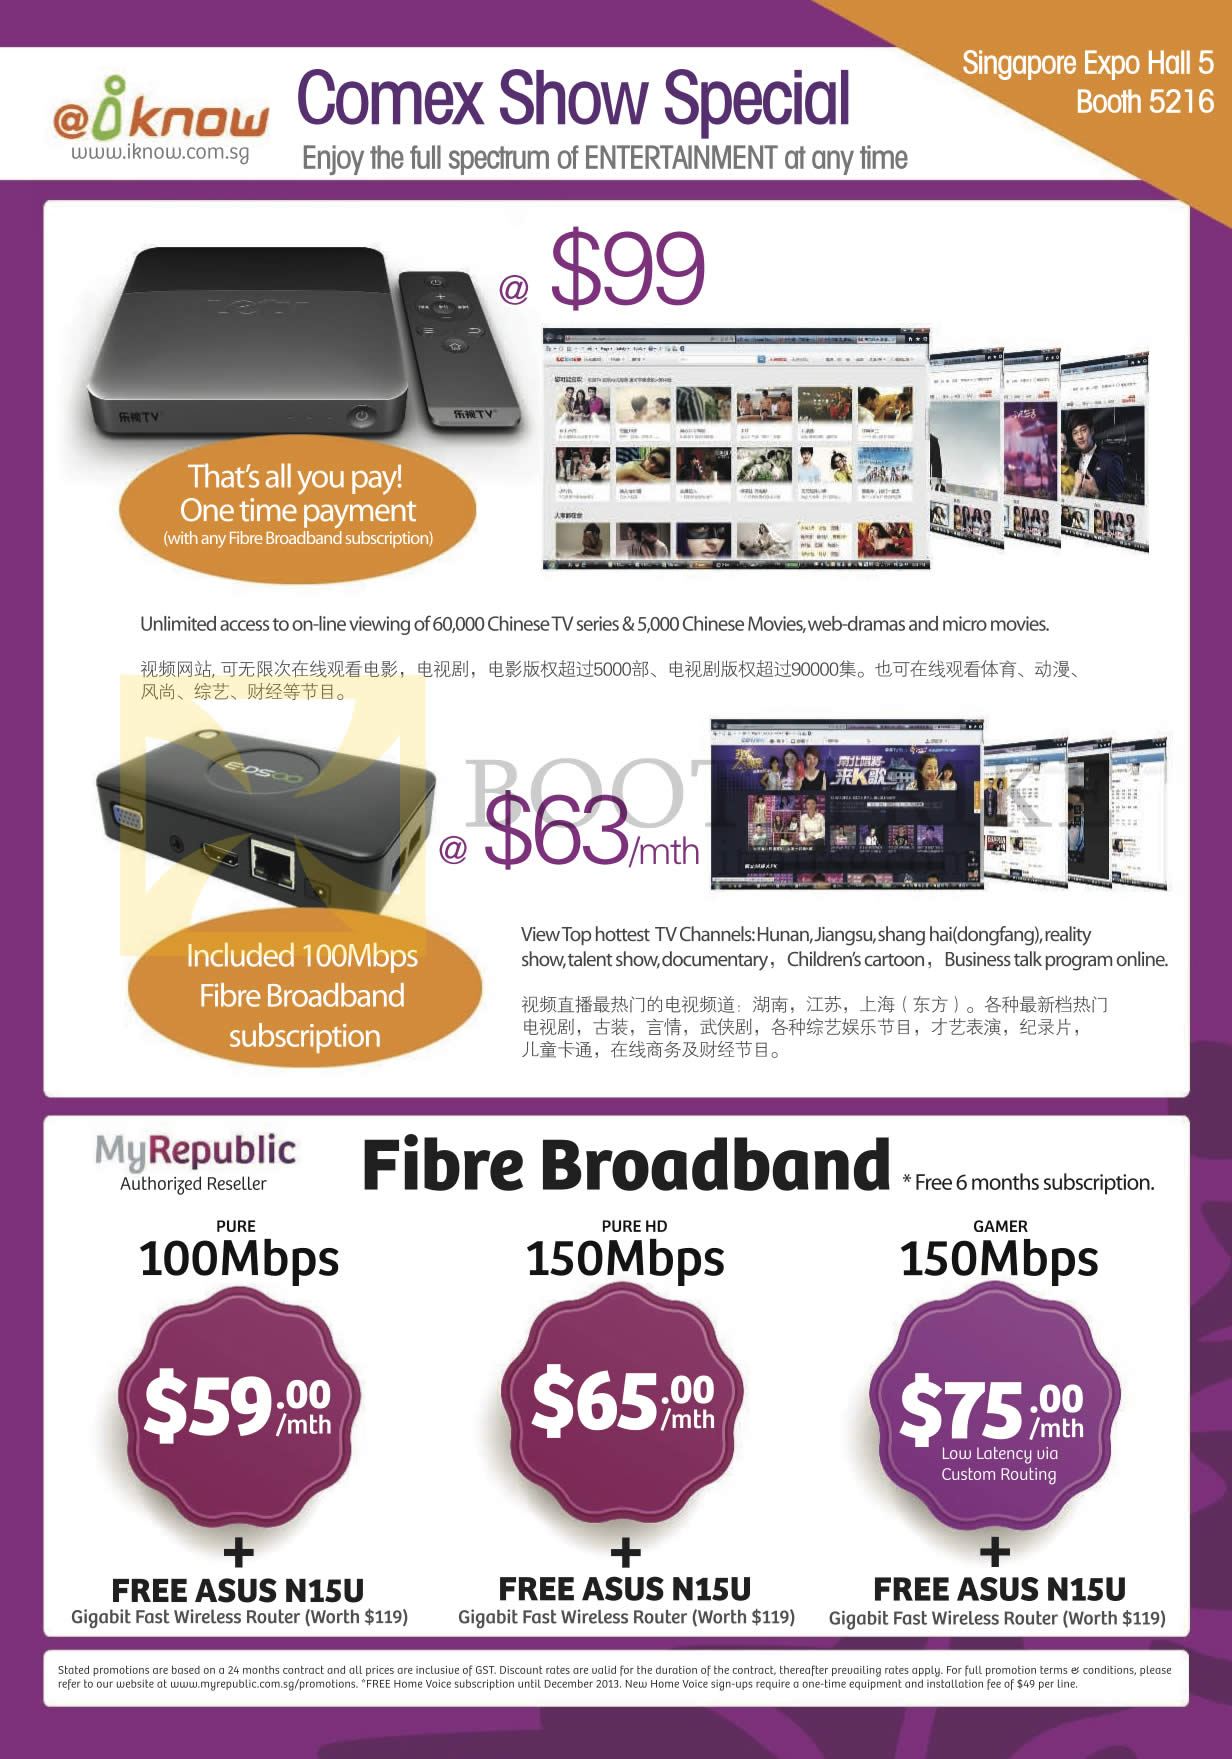 COMEX 2013 price list image brochure of MyRepublic IKnow Fibre Broadband Pure, Pure HD, Gamer, Online TV Viewing